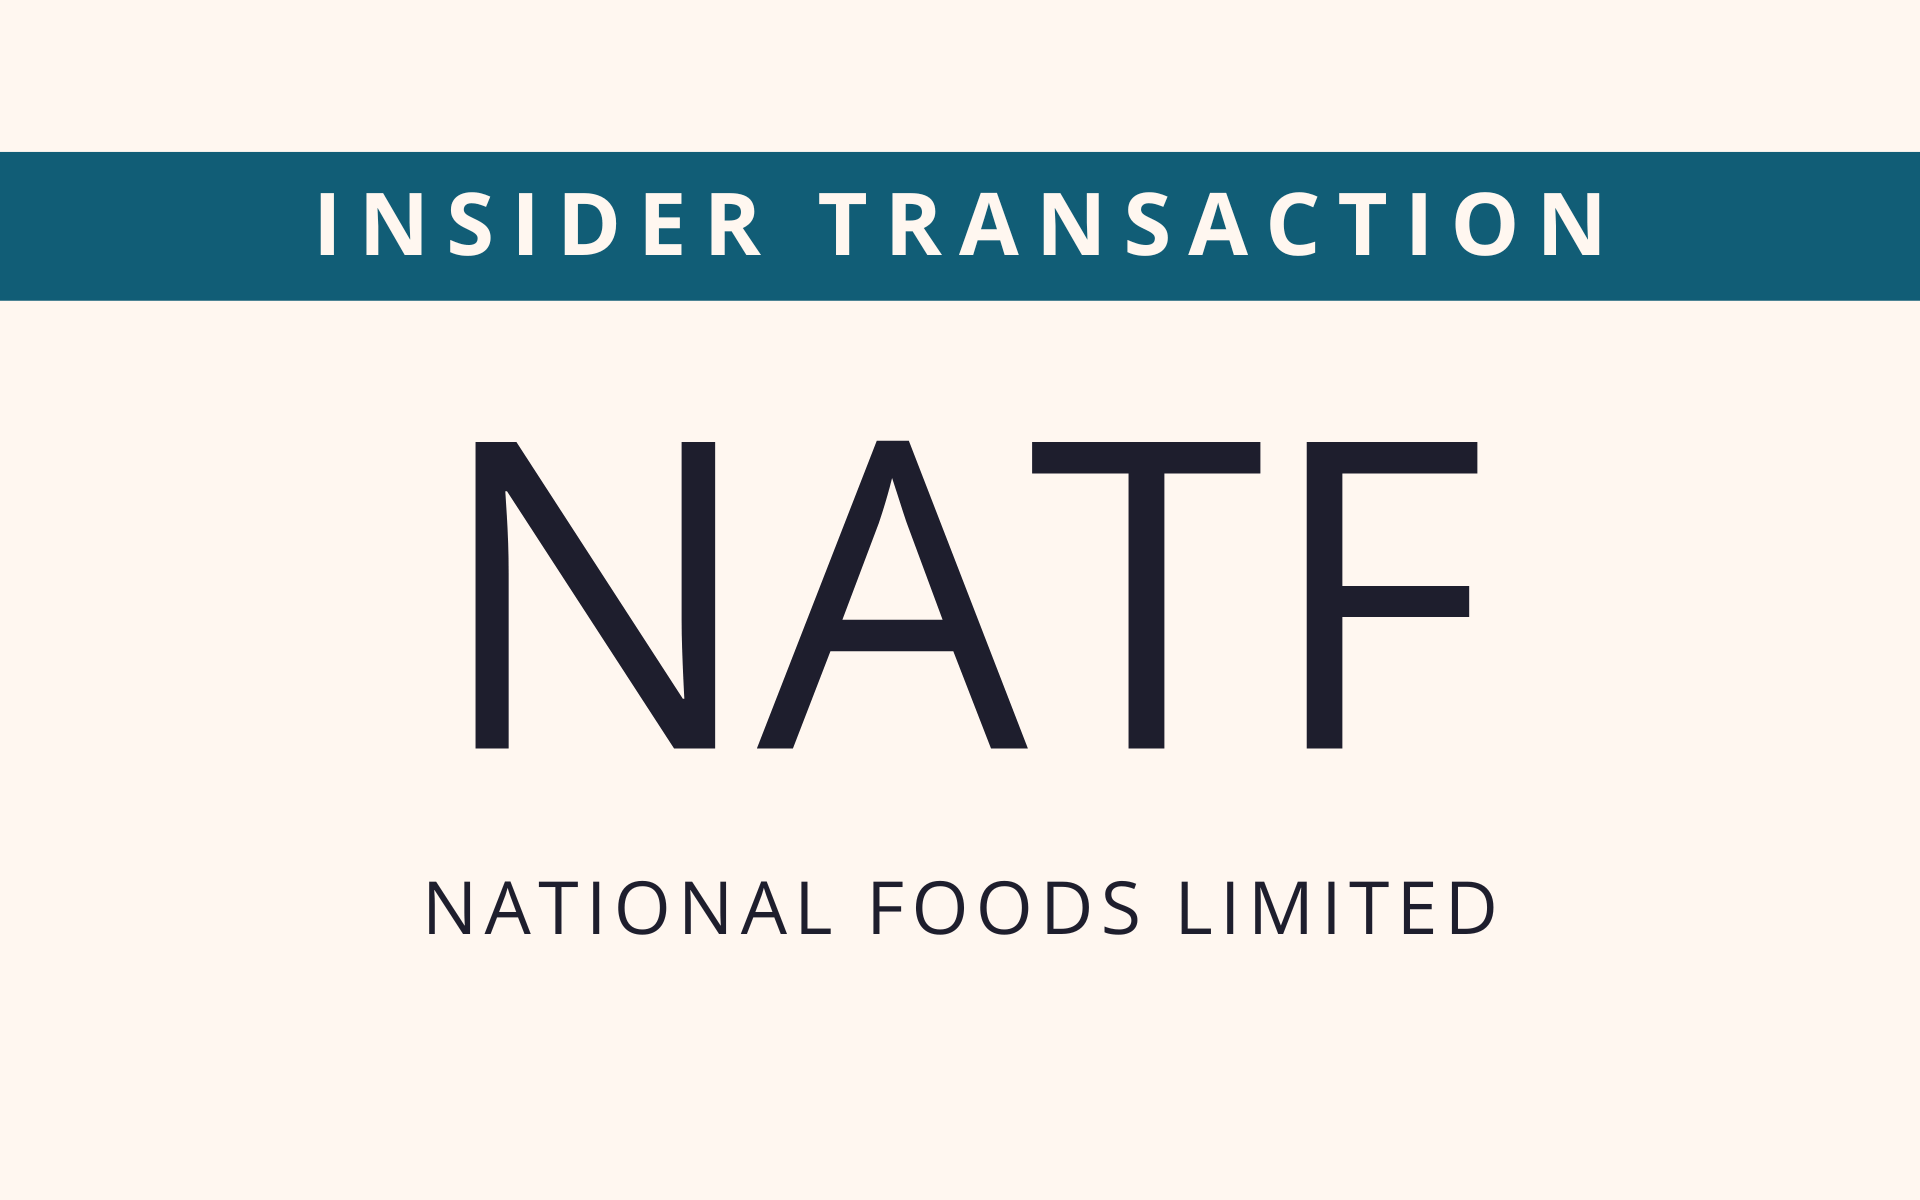 NATF - Insider Transaction